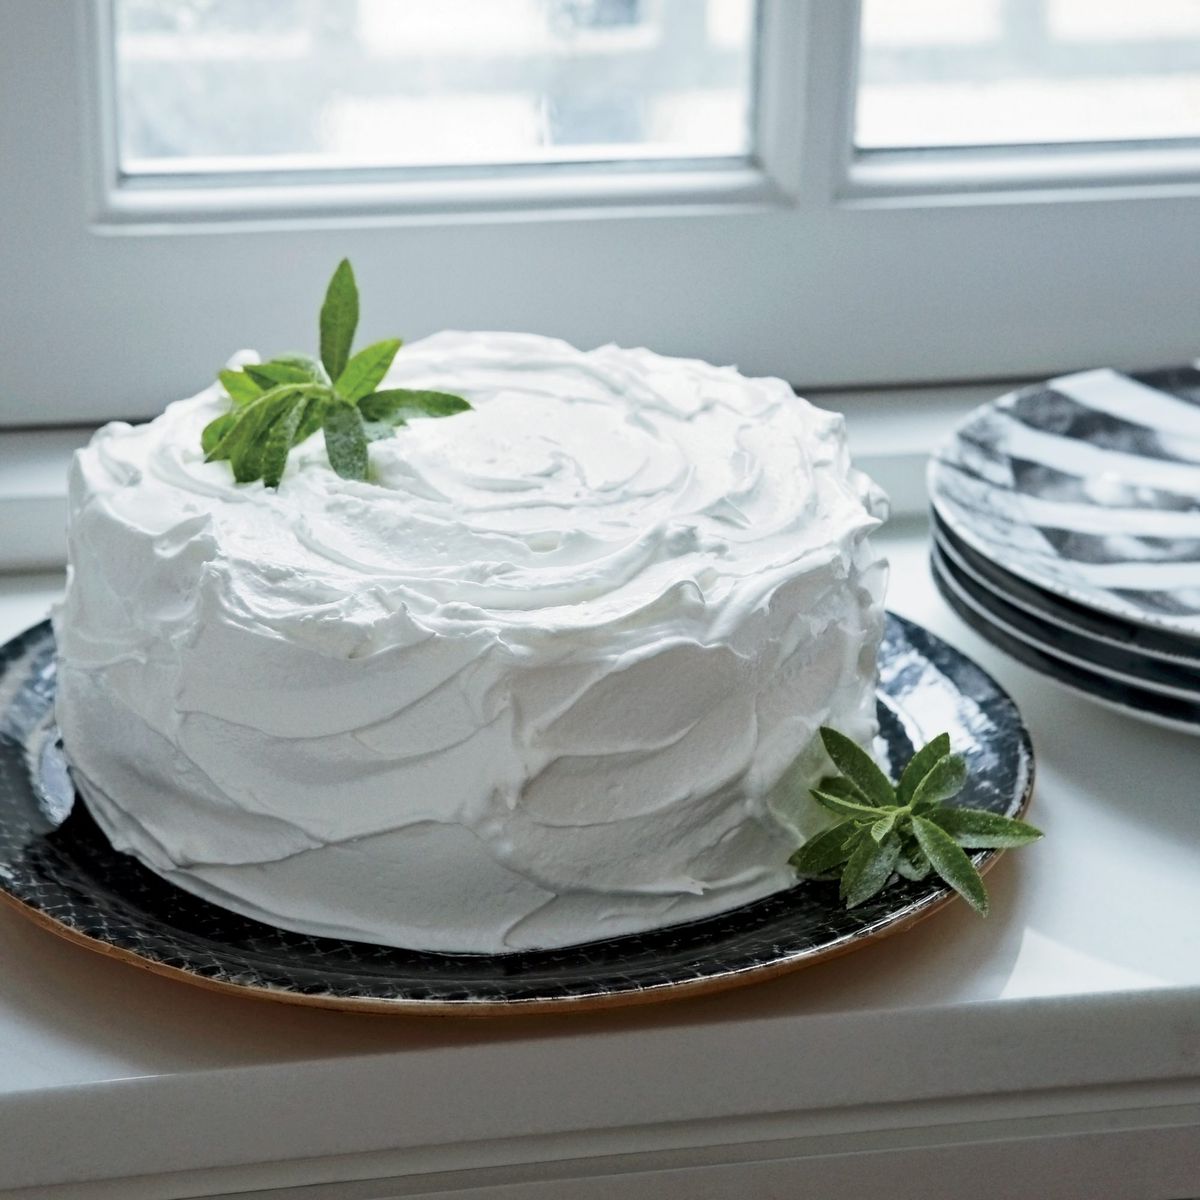 Dulce De Leche Layer Cake. Photo &copy; Petrina Tinslay